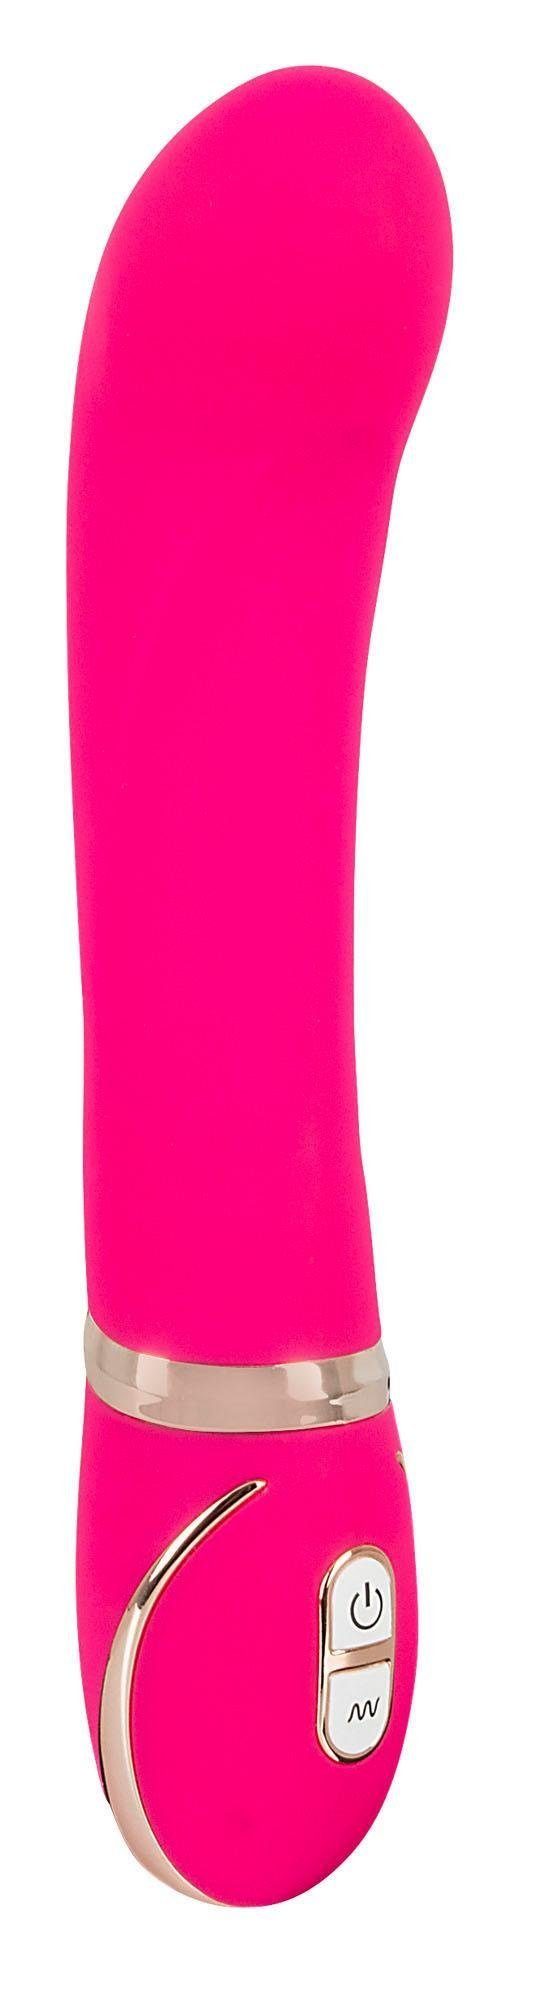 Couture wasserdicht Row Vibe Pink, Front G-Punkt-Vibrator